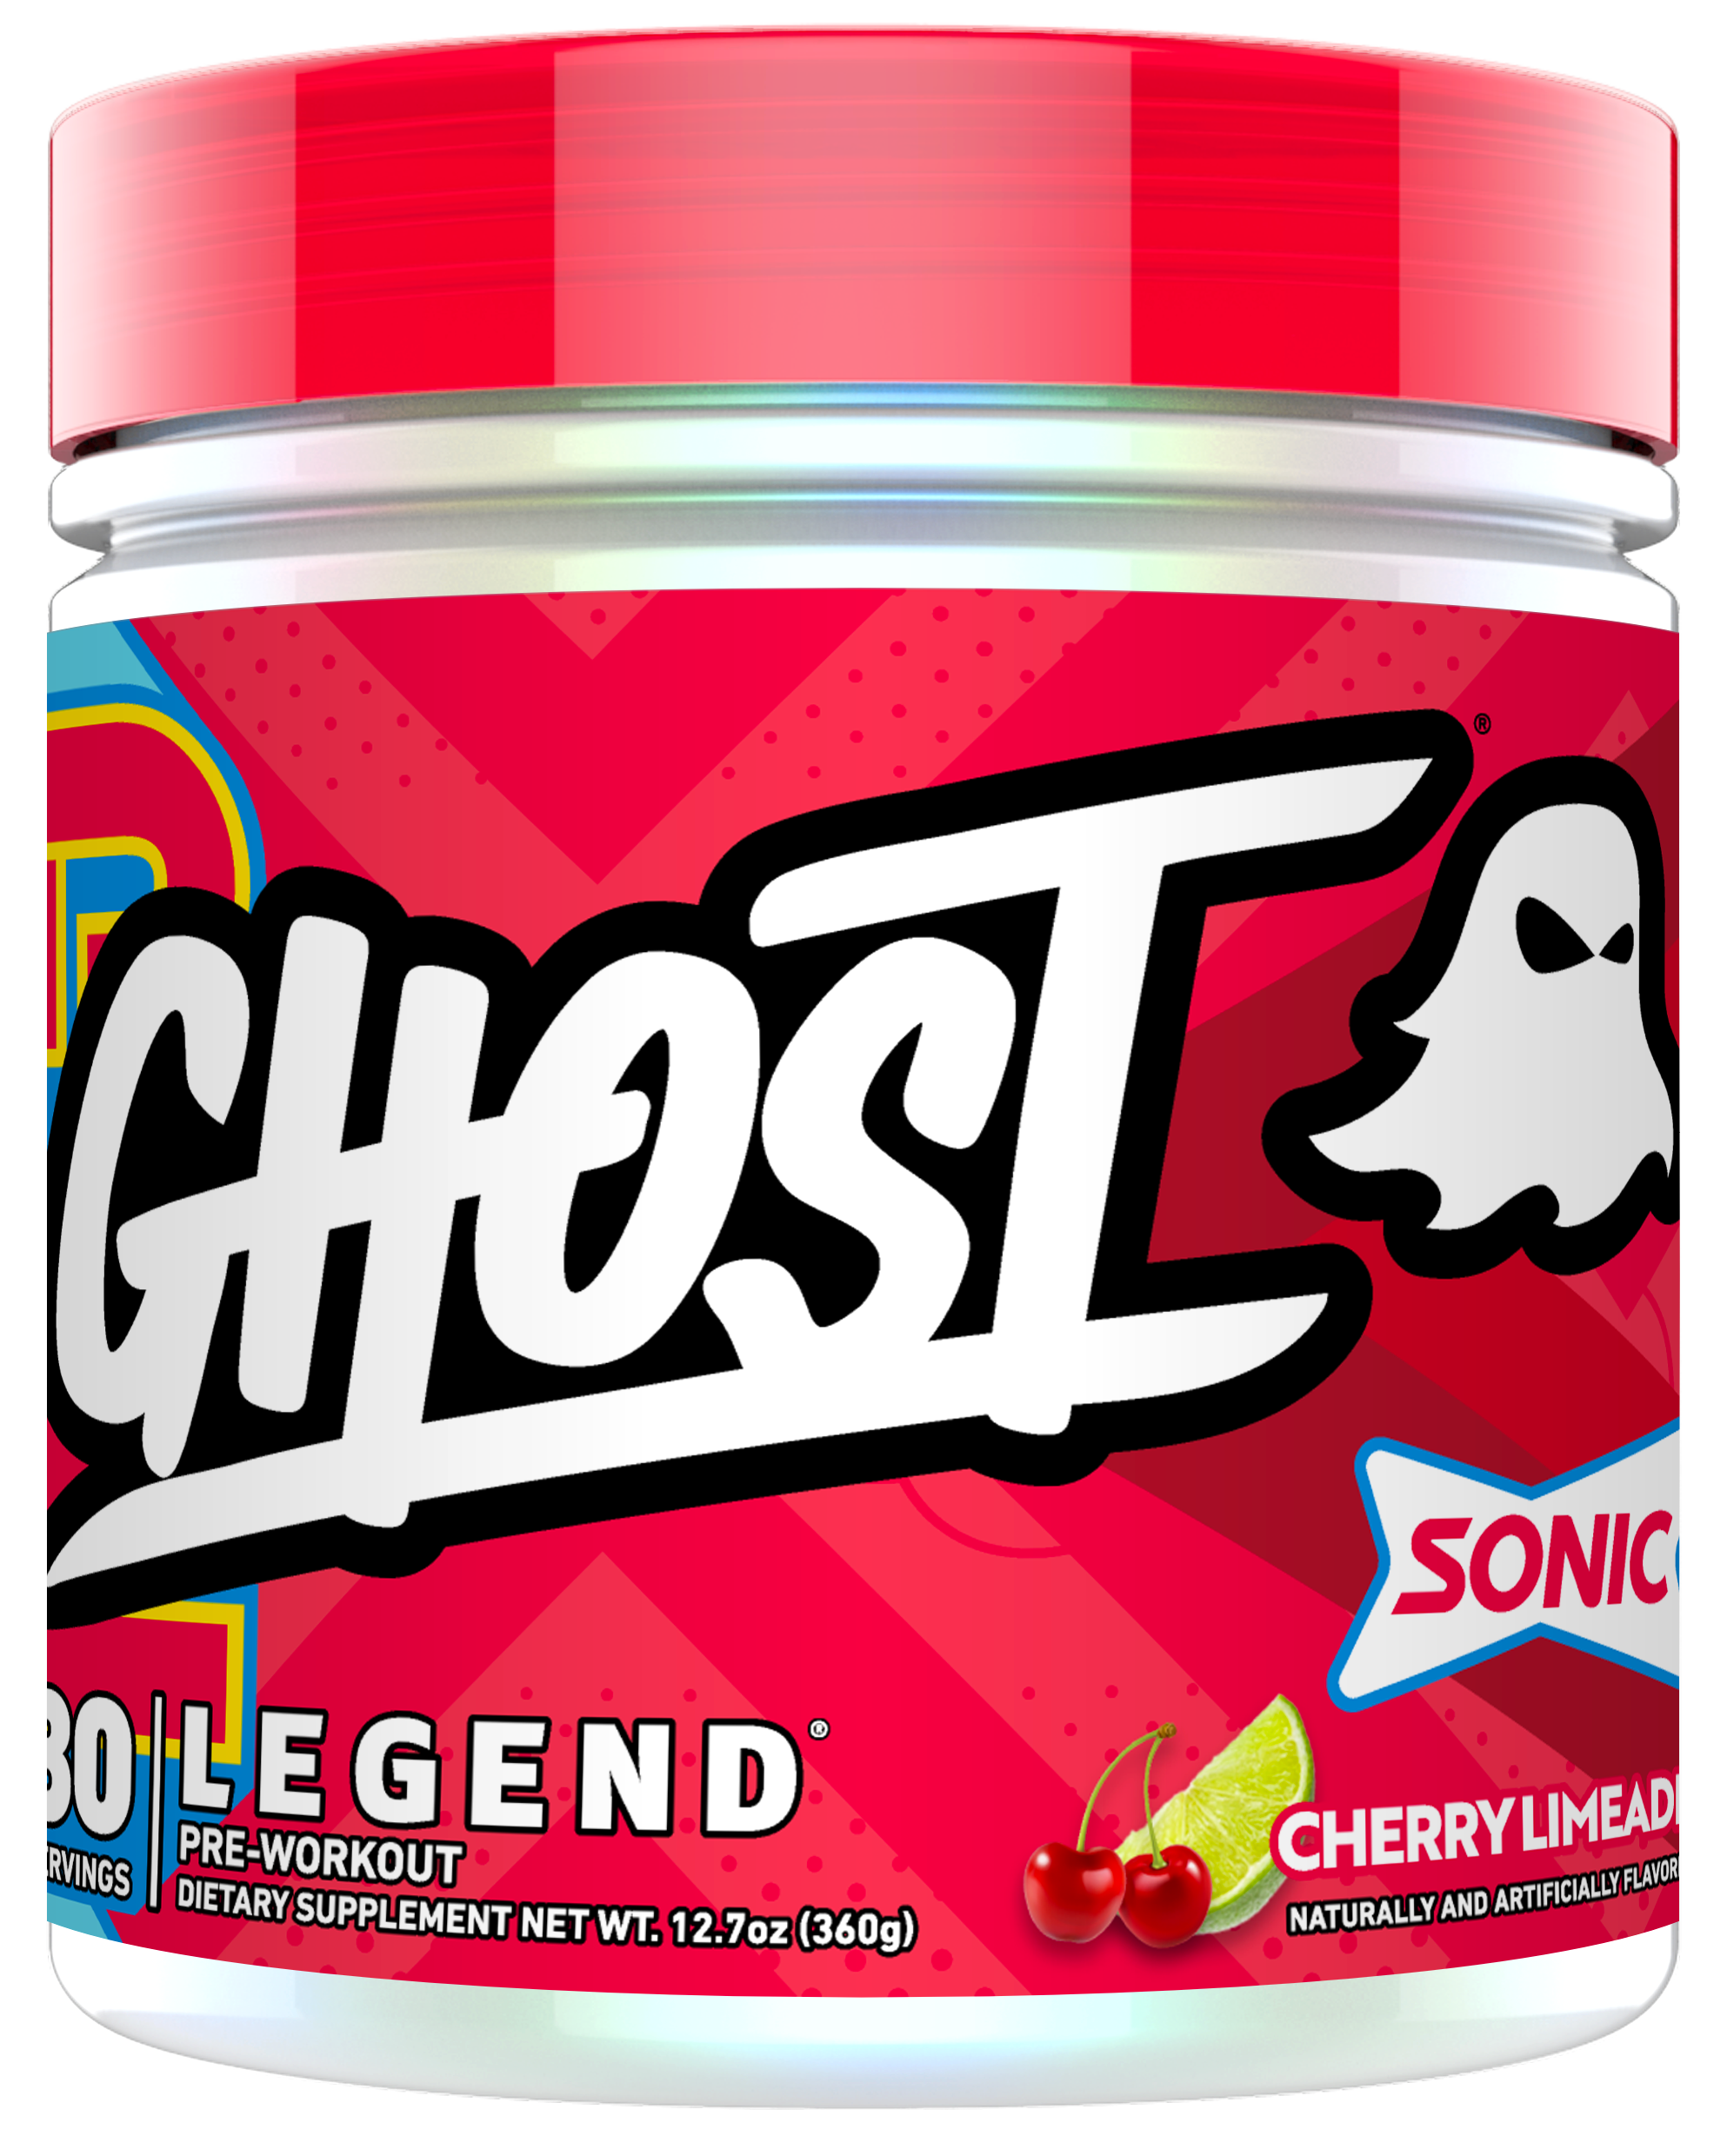 Ghost Legend Sonic Cherry Limeade